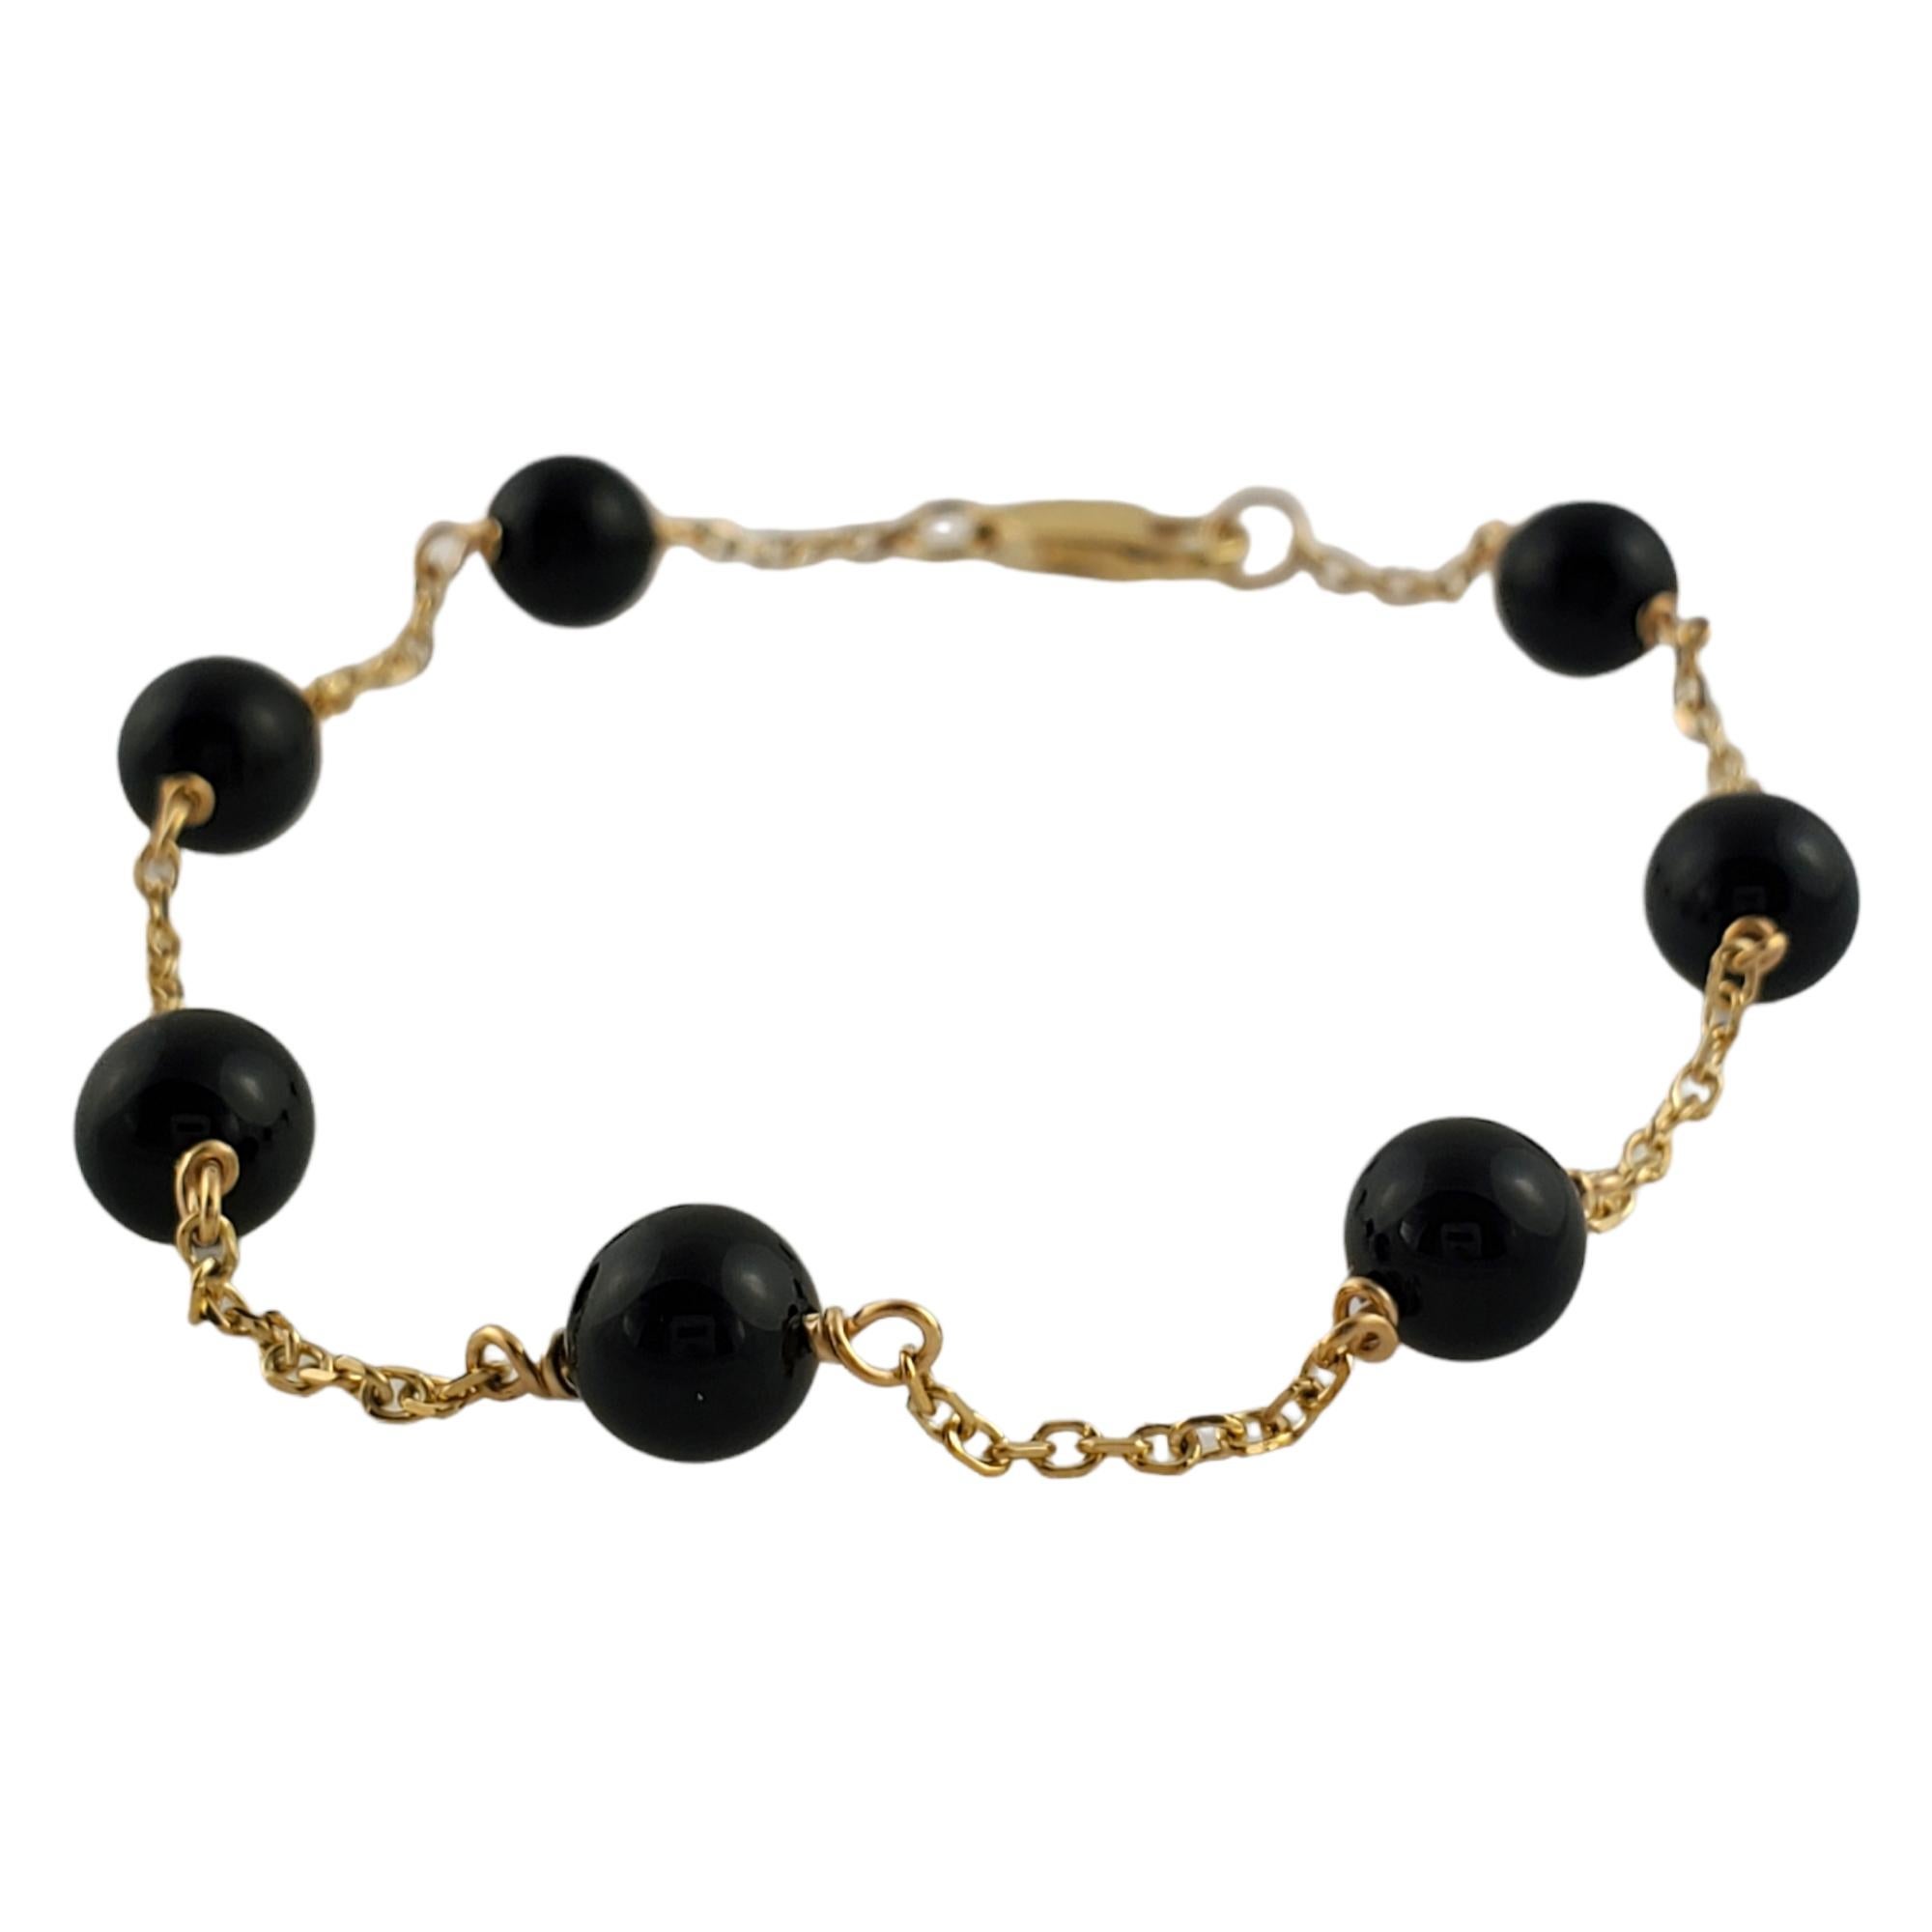 Vintage 14K Gelbgold schwarz Perlenarmband

Schönes goldenes Kettenarmband mit schwarzer Perlenverzierung!

7 runde schwarze Perlen

Größe: 7 Zoll mit Maßband, 6,5 Zoll am Armband Kegel geschlossen

Gewicht: 3,4 g/ 2,1 dwt

Punze: 14K

Sehr guter